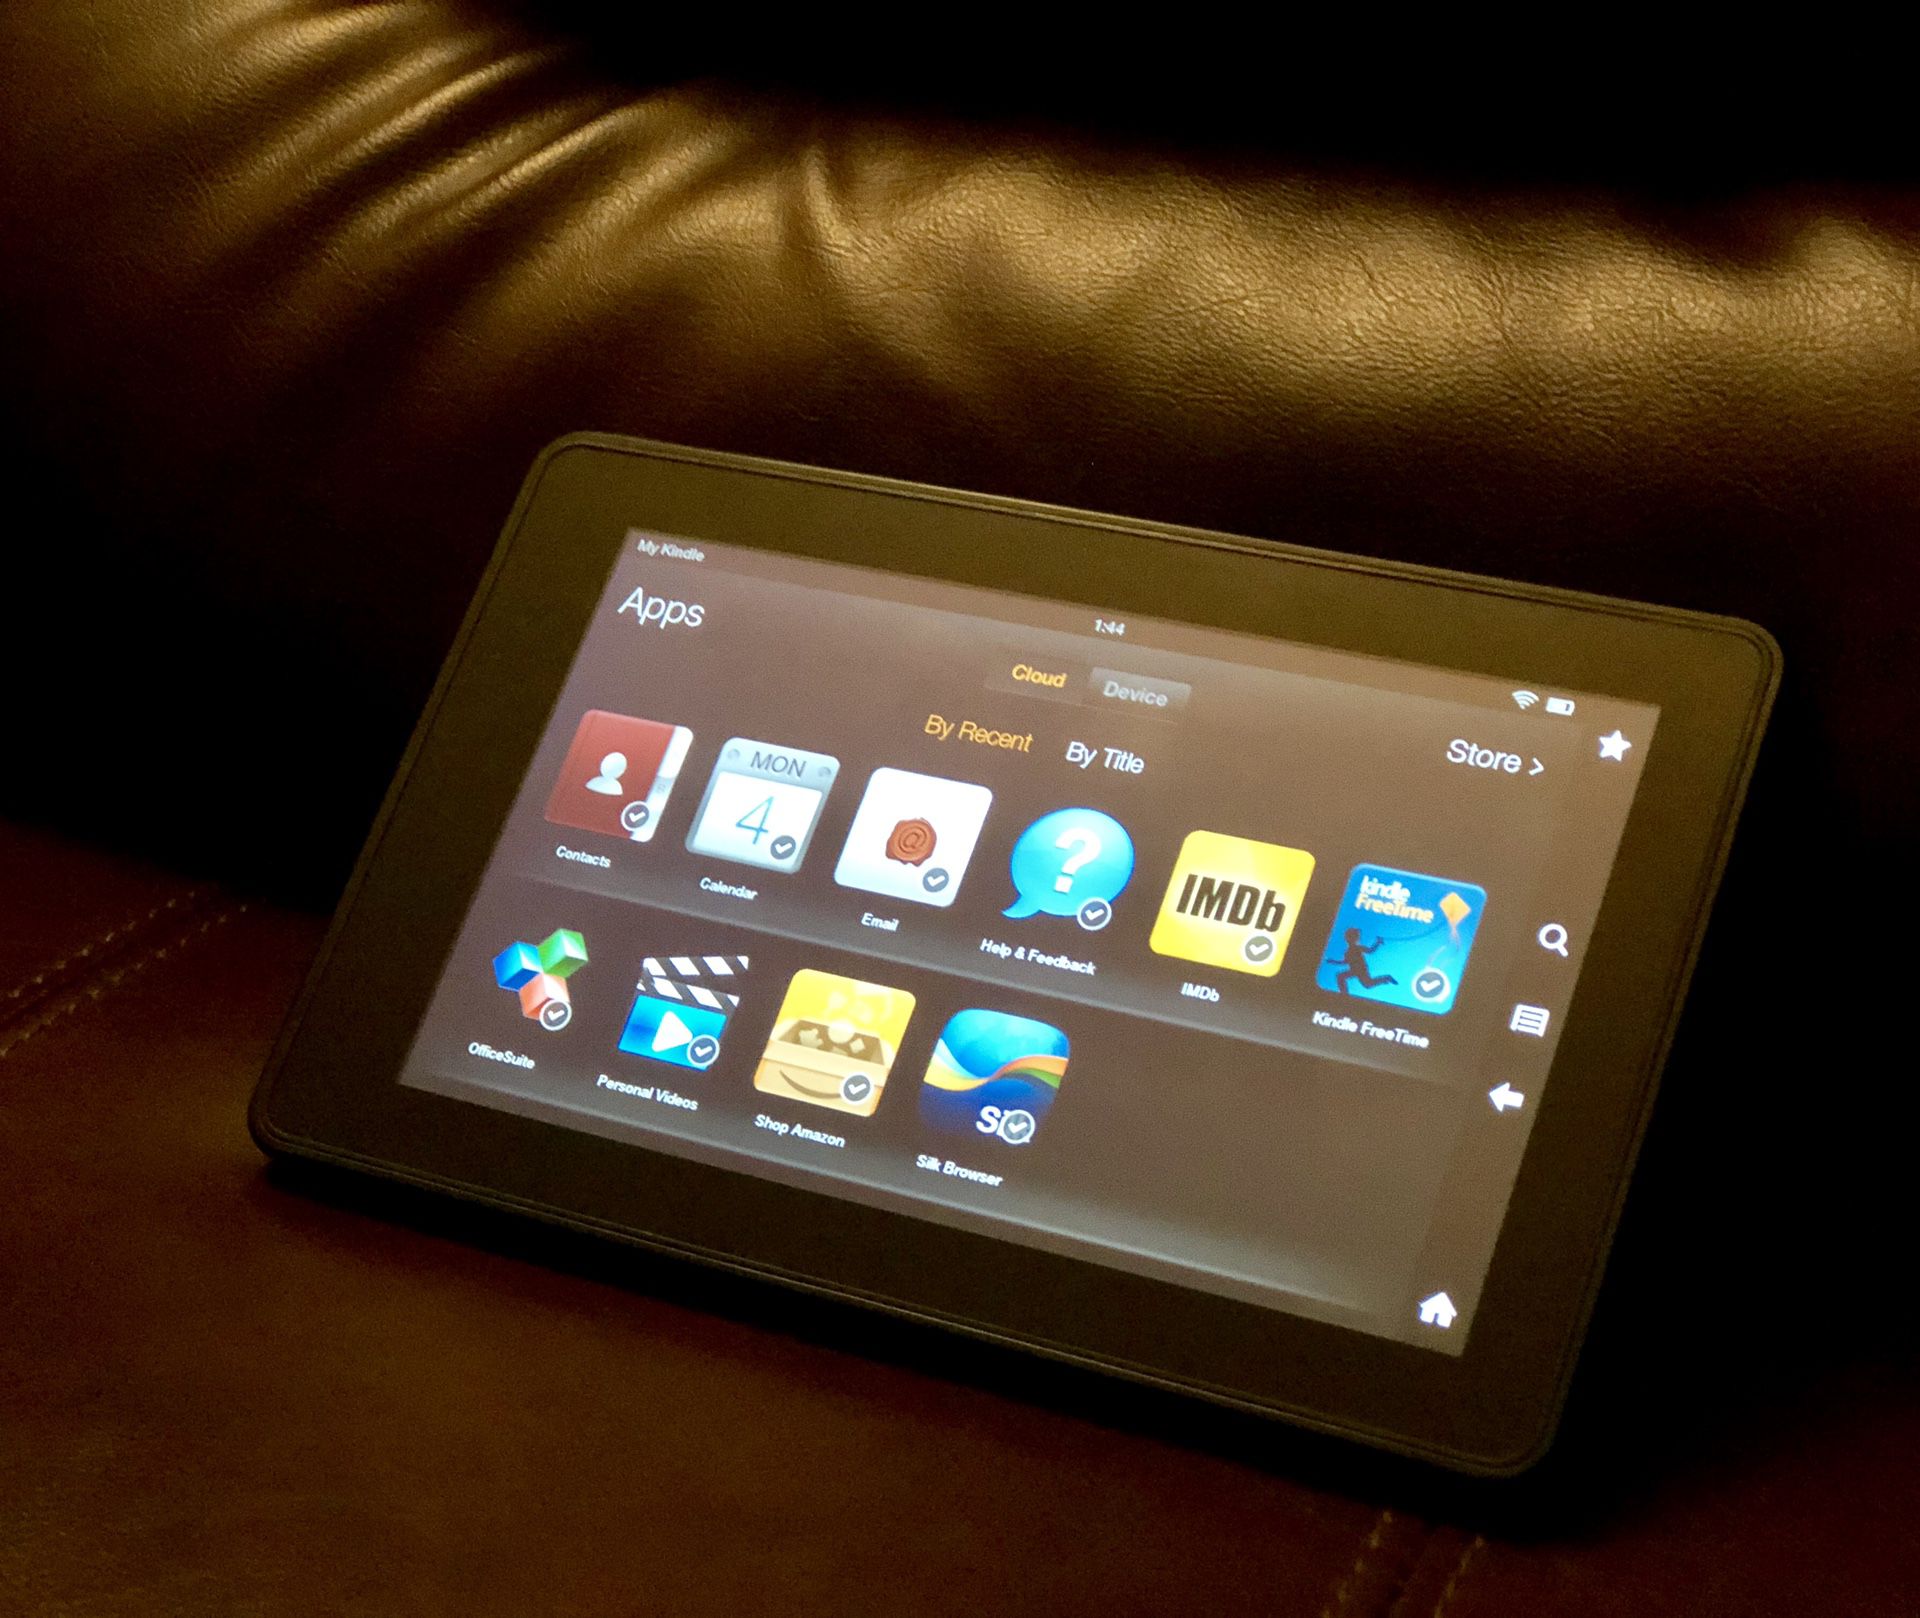 Kindle fire Amazon Tablet like new